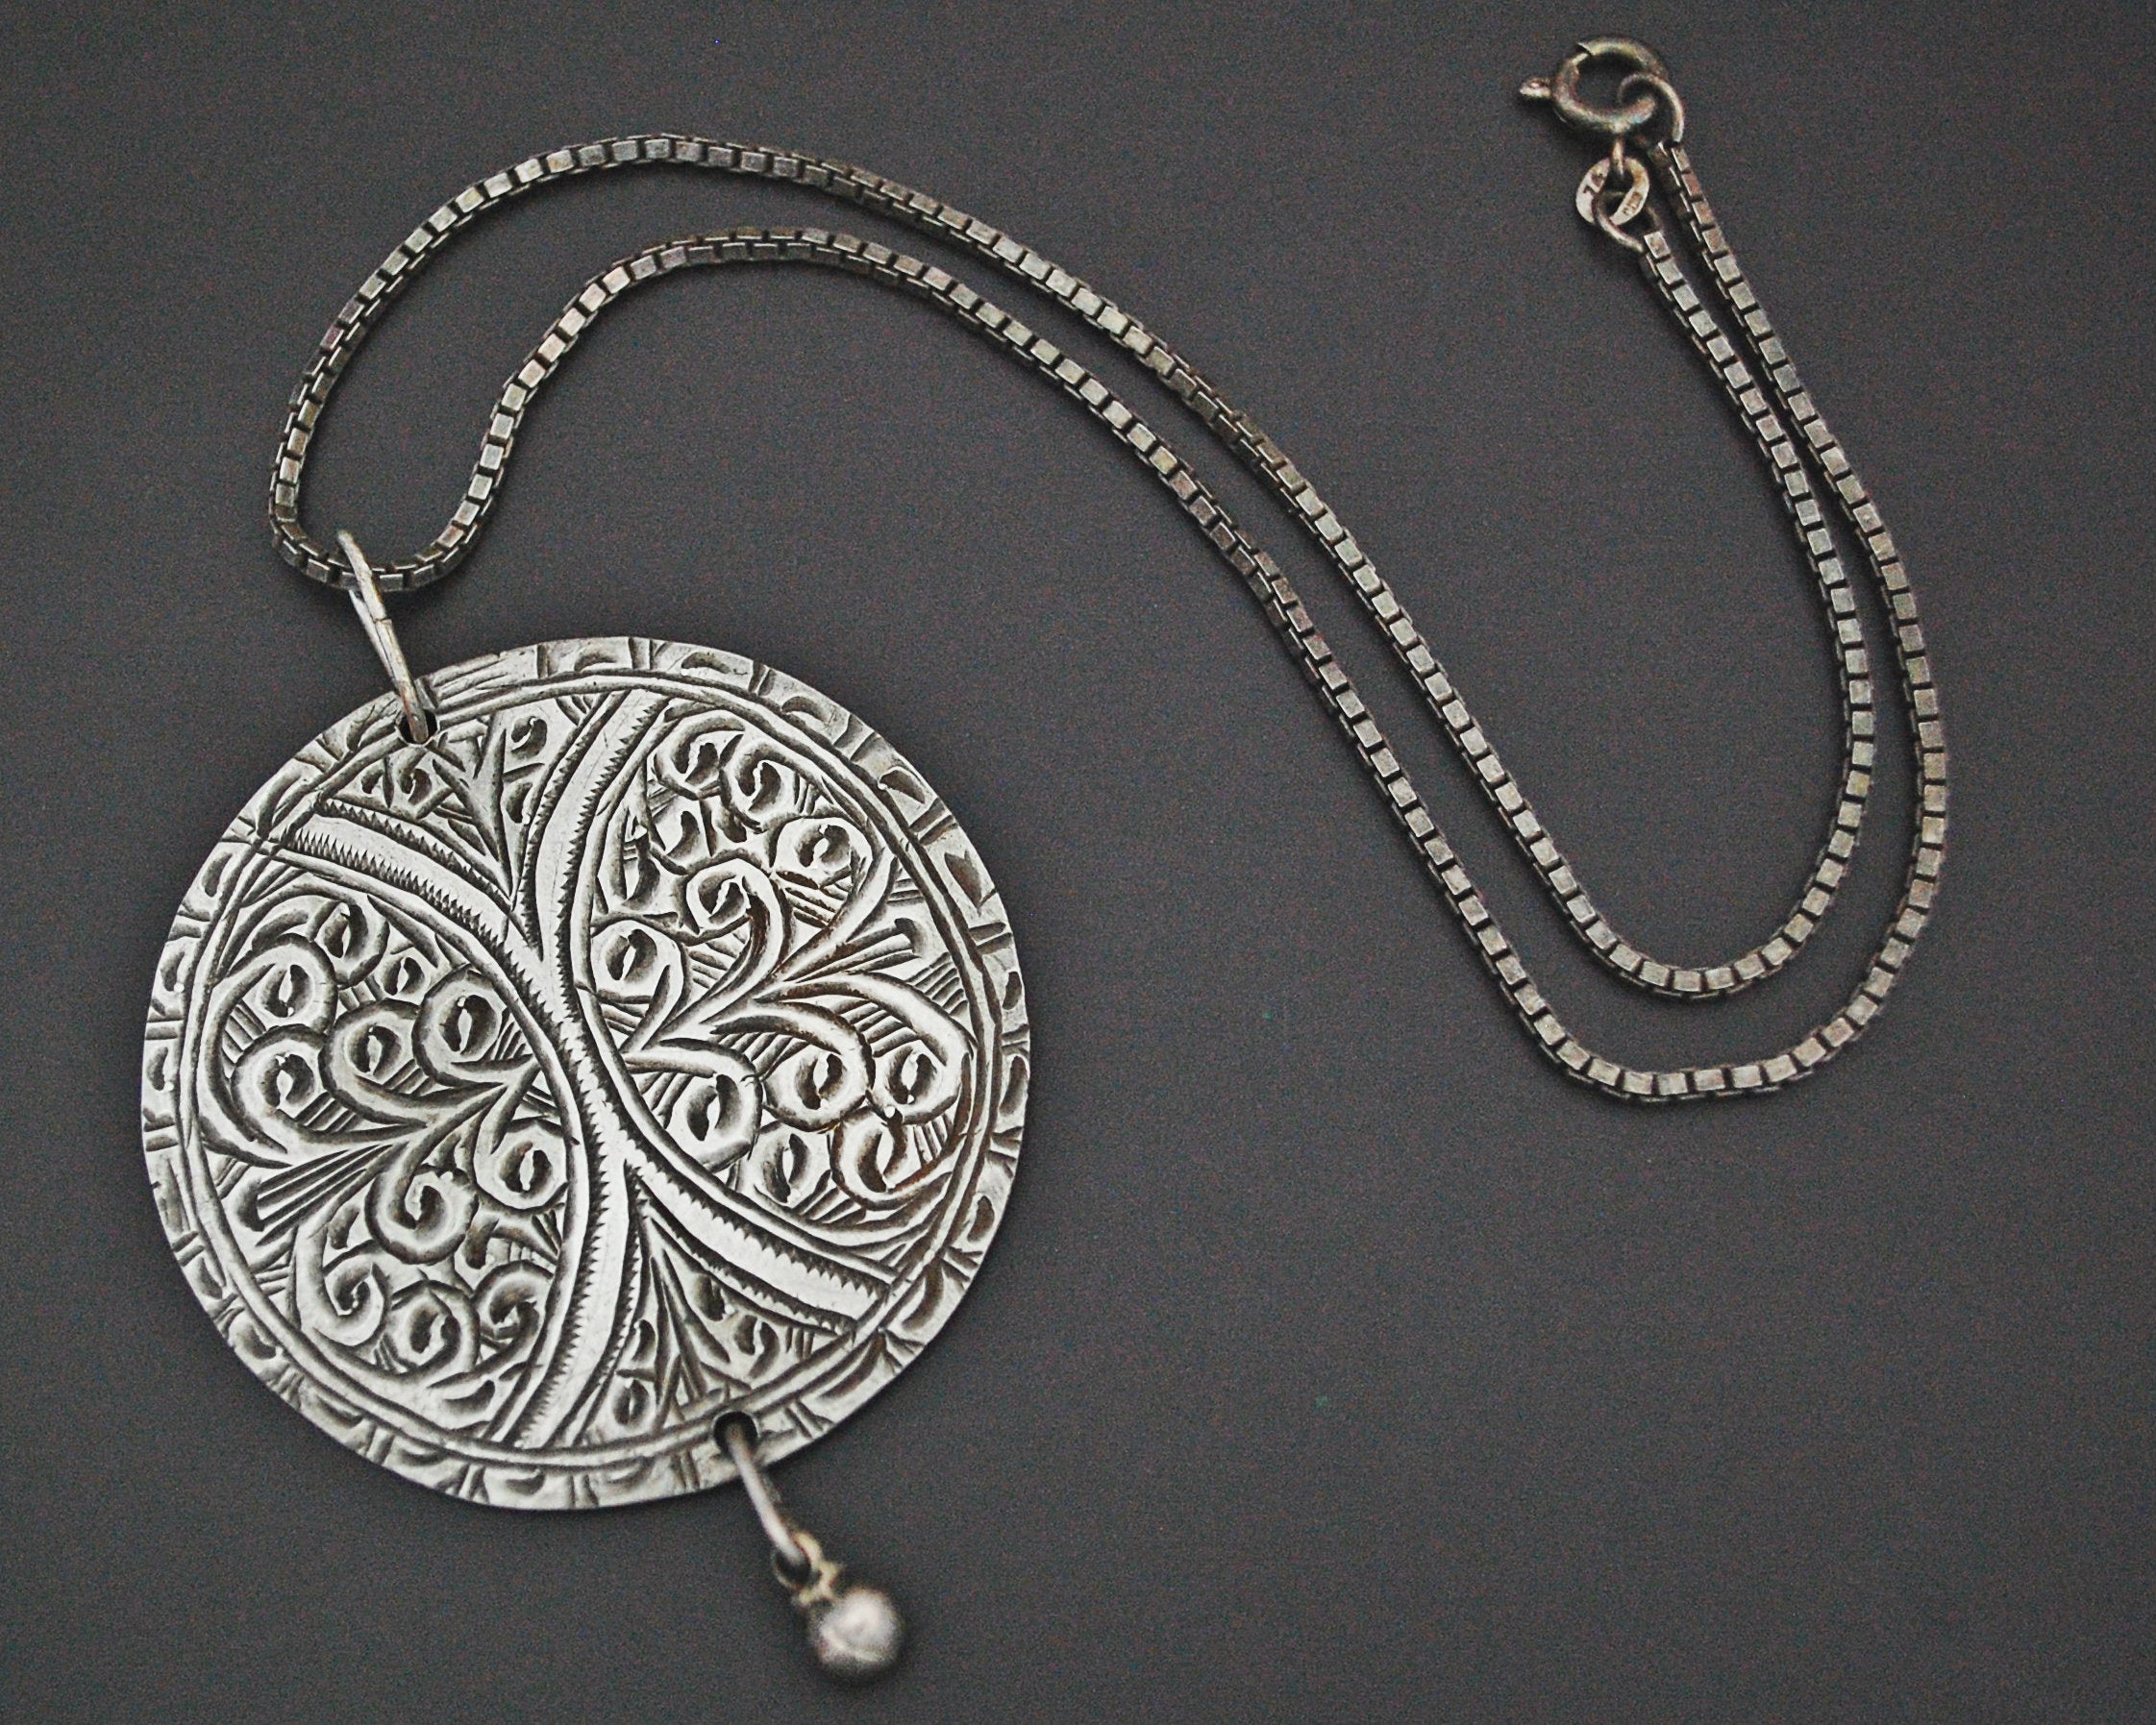 Engraved Berber Head Ornament Pendant on Chain